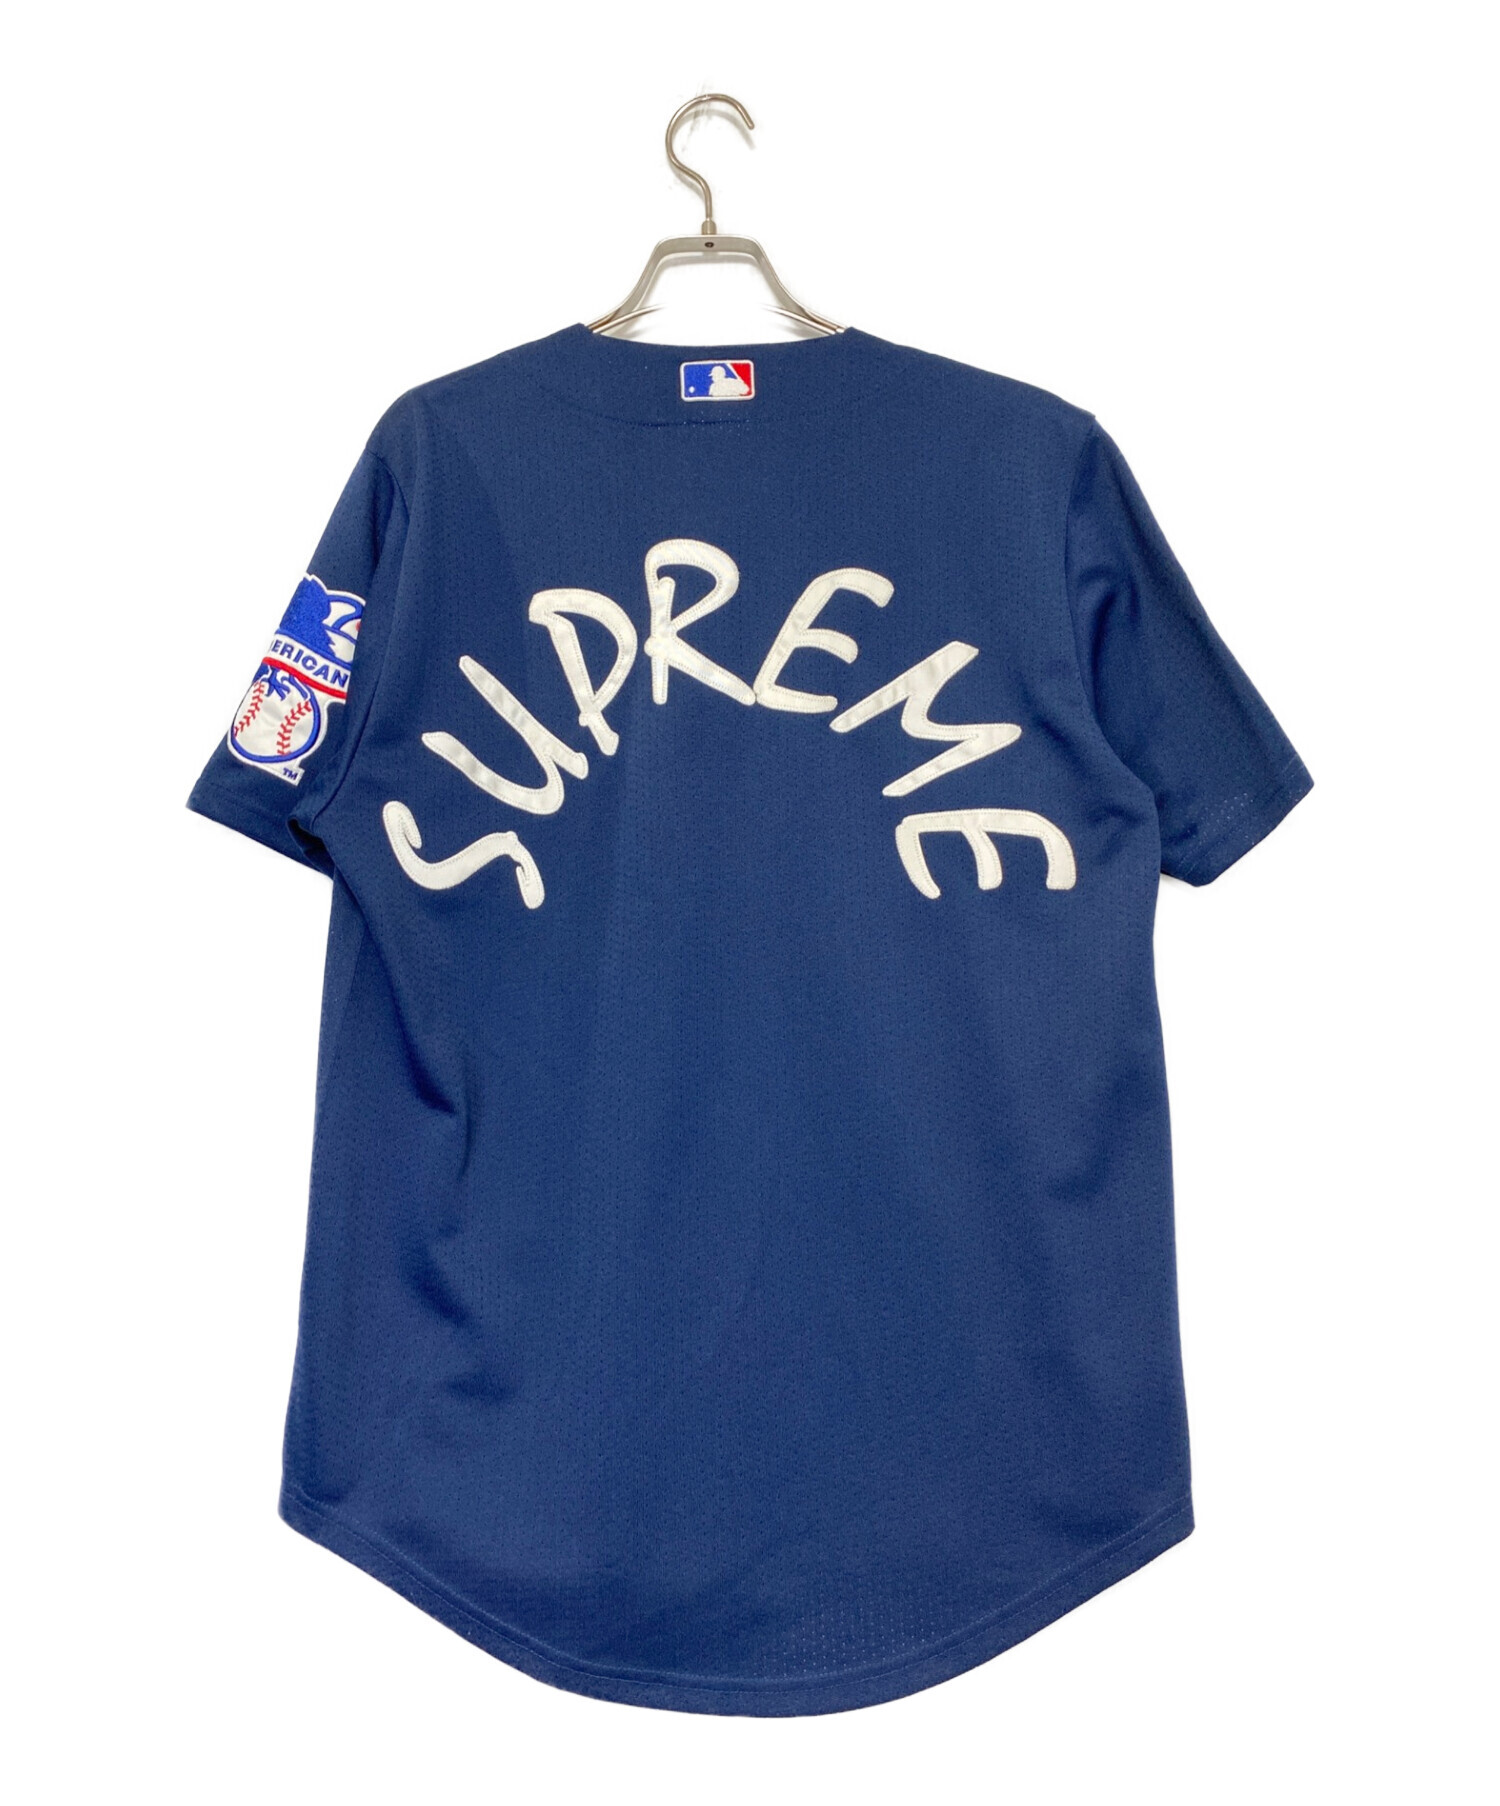 Tシャツ/カットソー(半袖/袖なし)Supreme Yankees baseball jersey ネイビー M